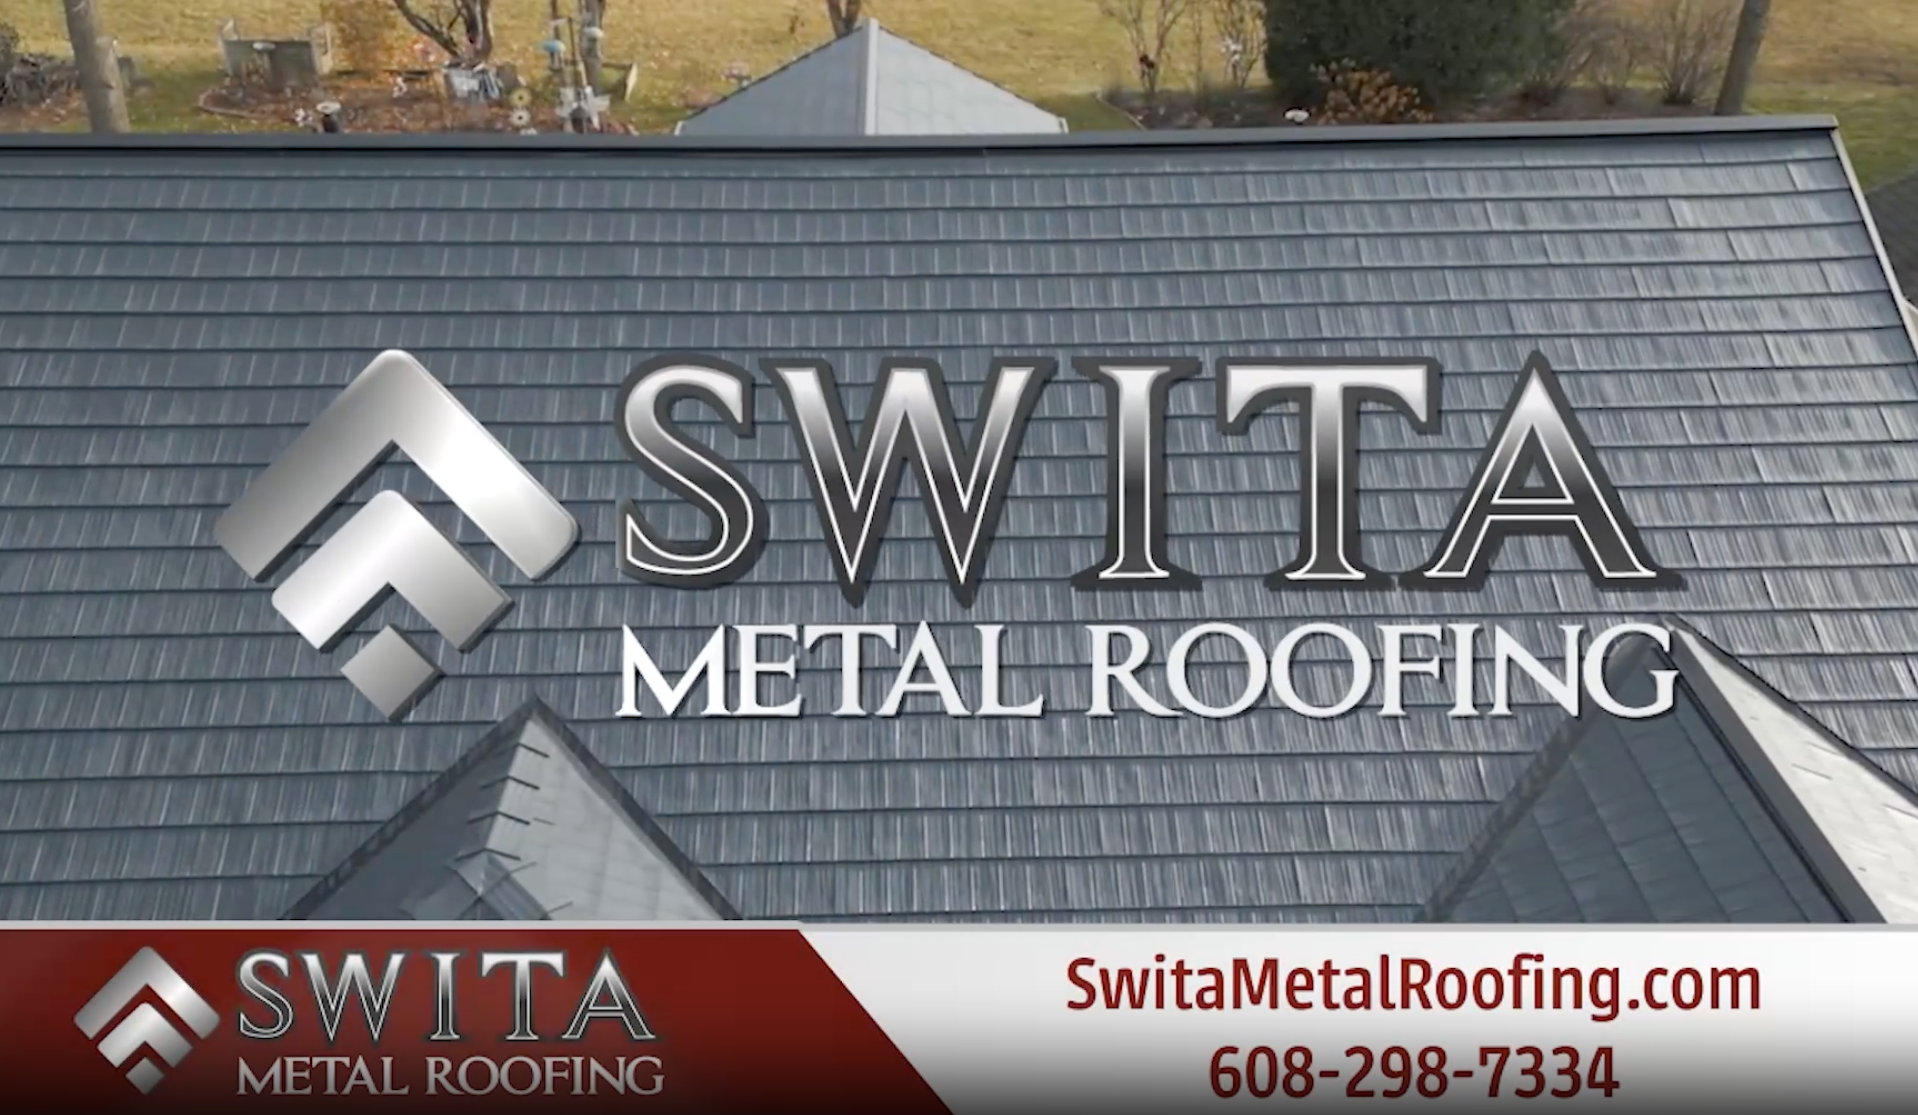 Swita Metal Roofing